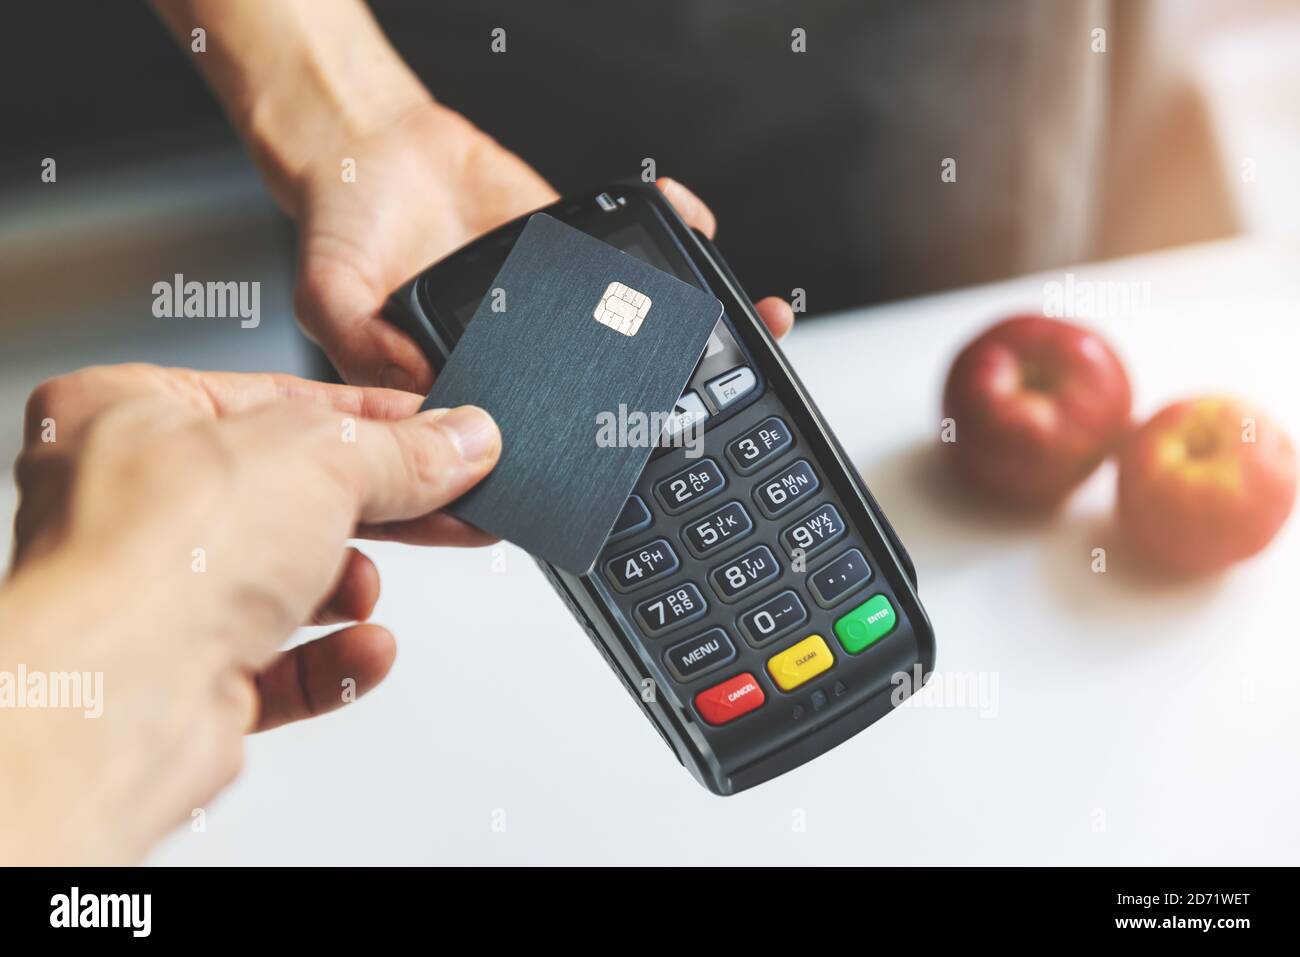 nfc kontaktlose Bezahlung per Kreditkarte und POS-Terminal Stockfoto